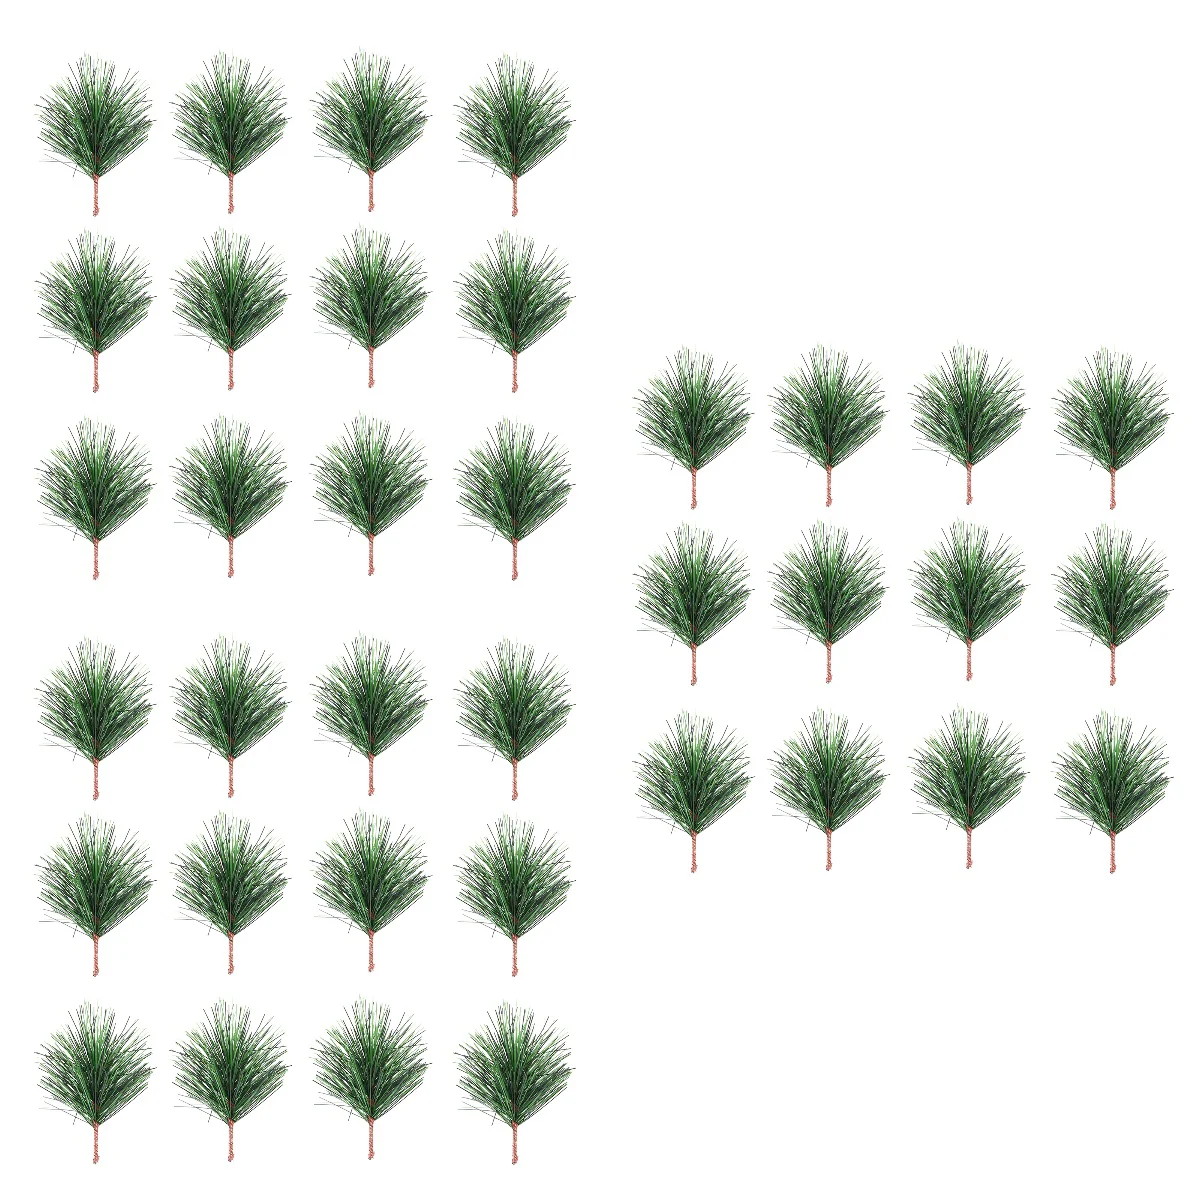 

72 Pcs Artificial Pine Branch Branches Decor Picks Christmas Indoor Plants Faux Tree Decoration Ornament Crafts Decorate